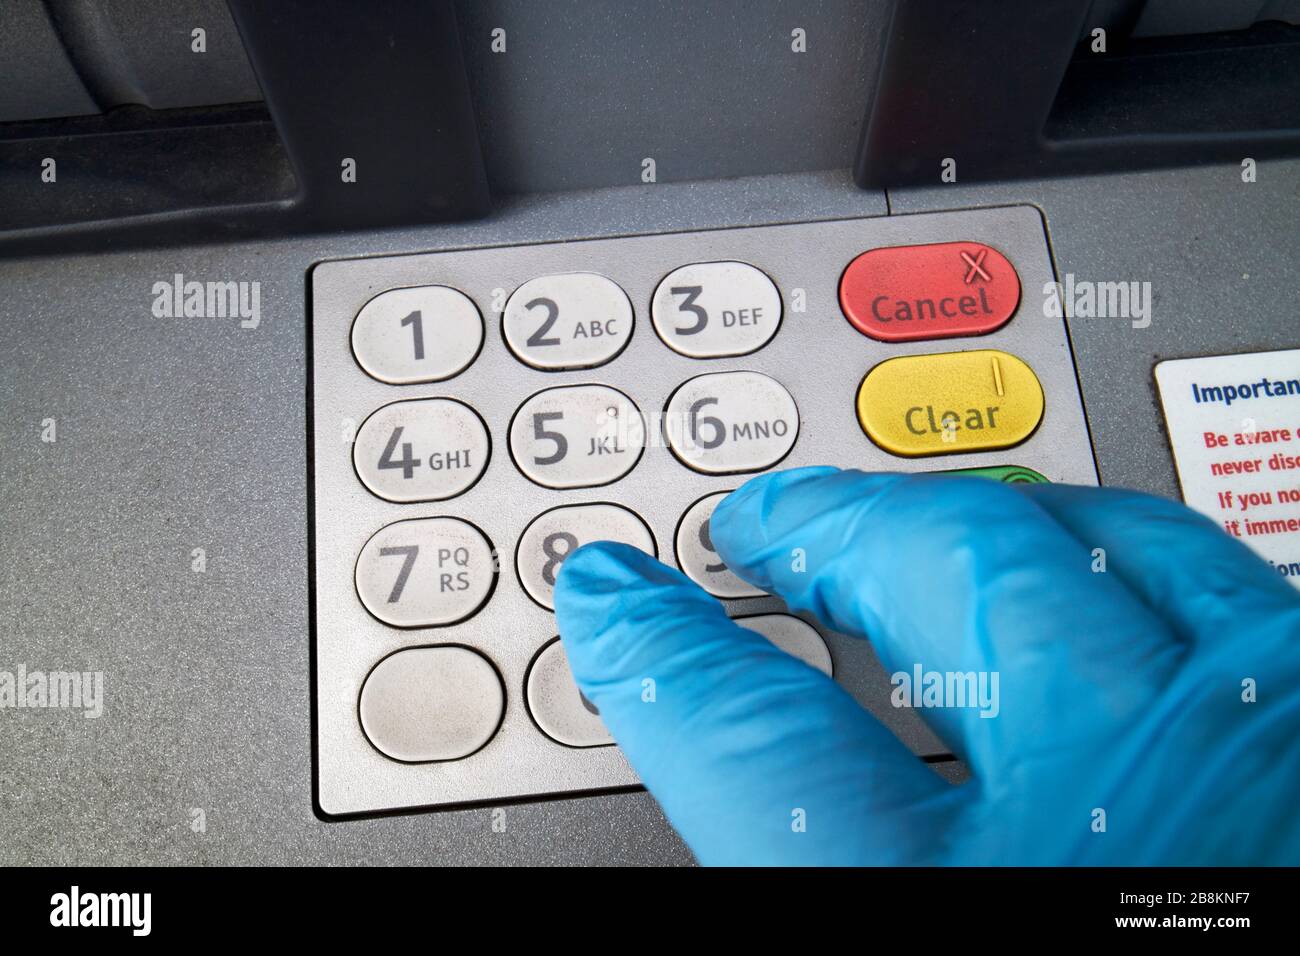 using gloved hand on dirty cash machine keypad due to covid-19 precautions glengormley newtownabbey northern ireland uk Stock Photo